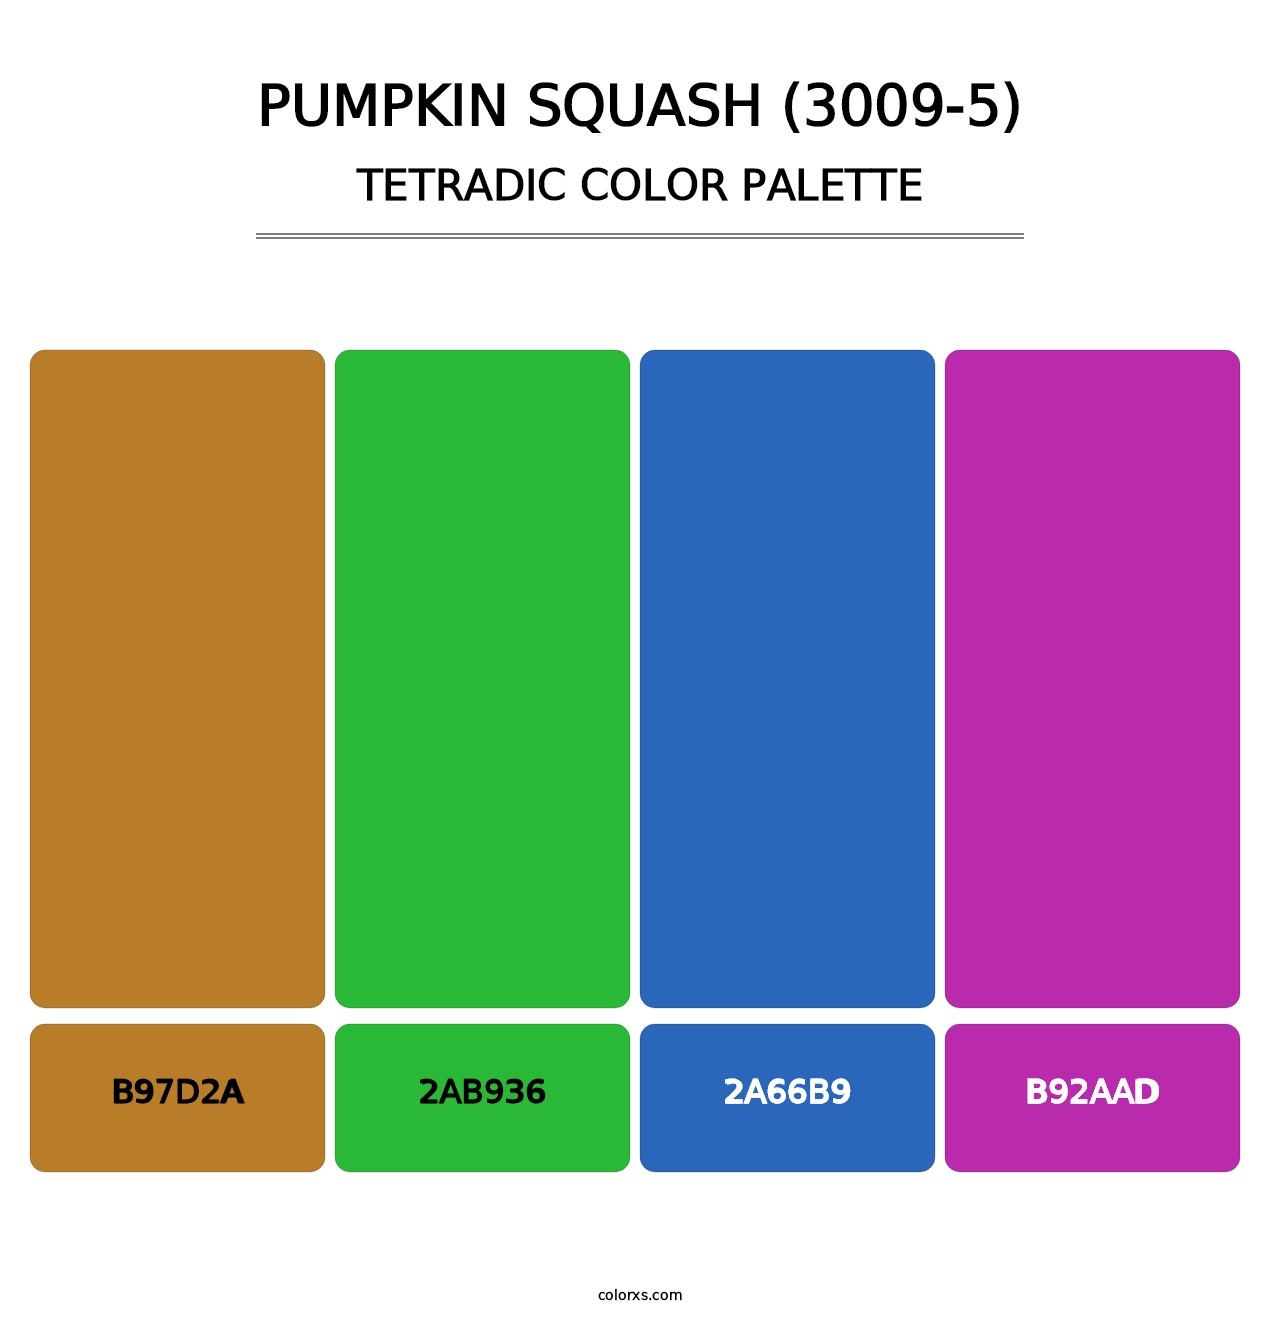 Pumpkin Squash (3009-5) - Tetradic Color Palette